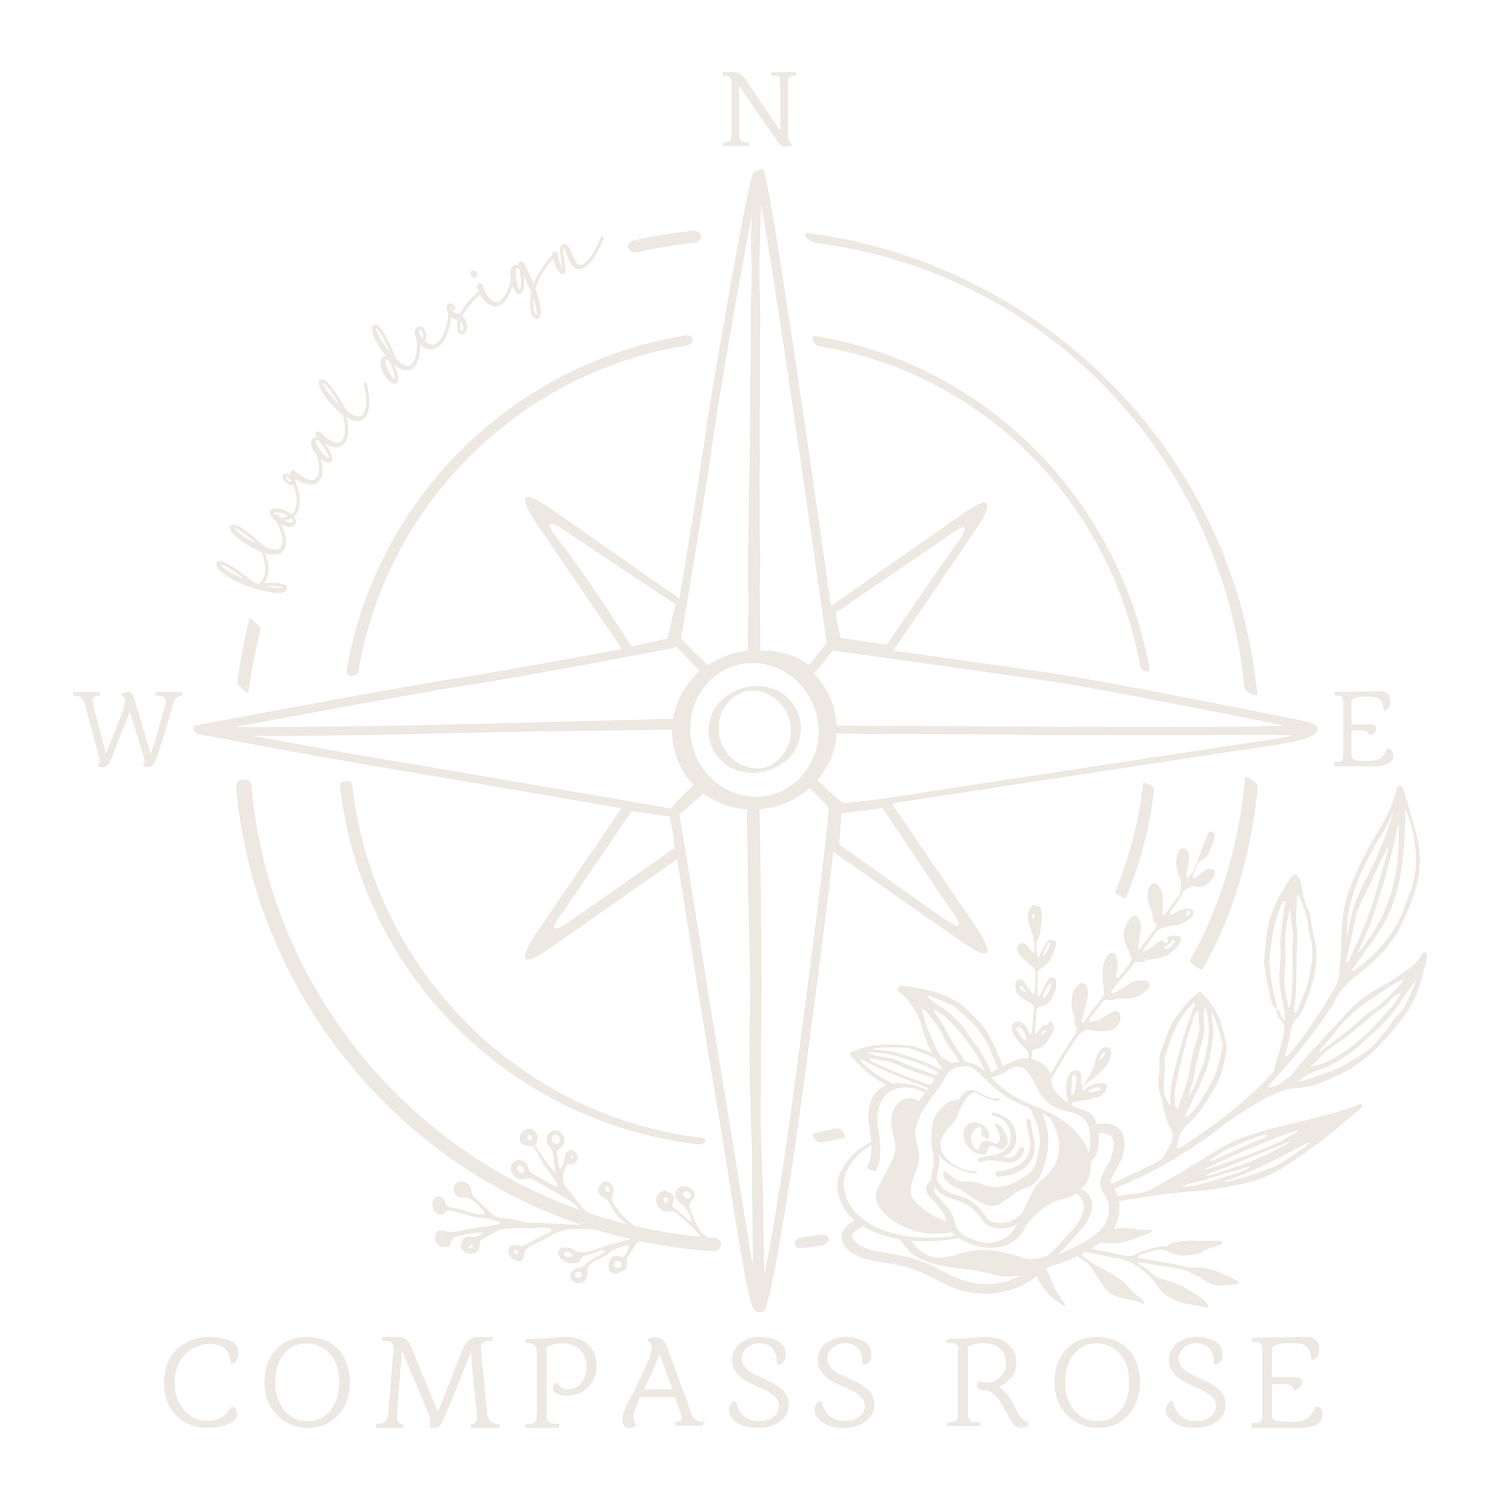 Compass Rose Floral Design